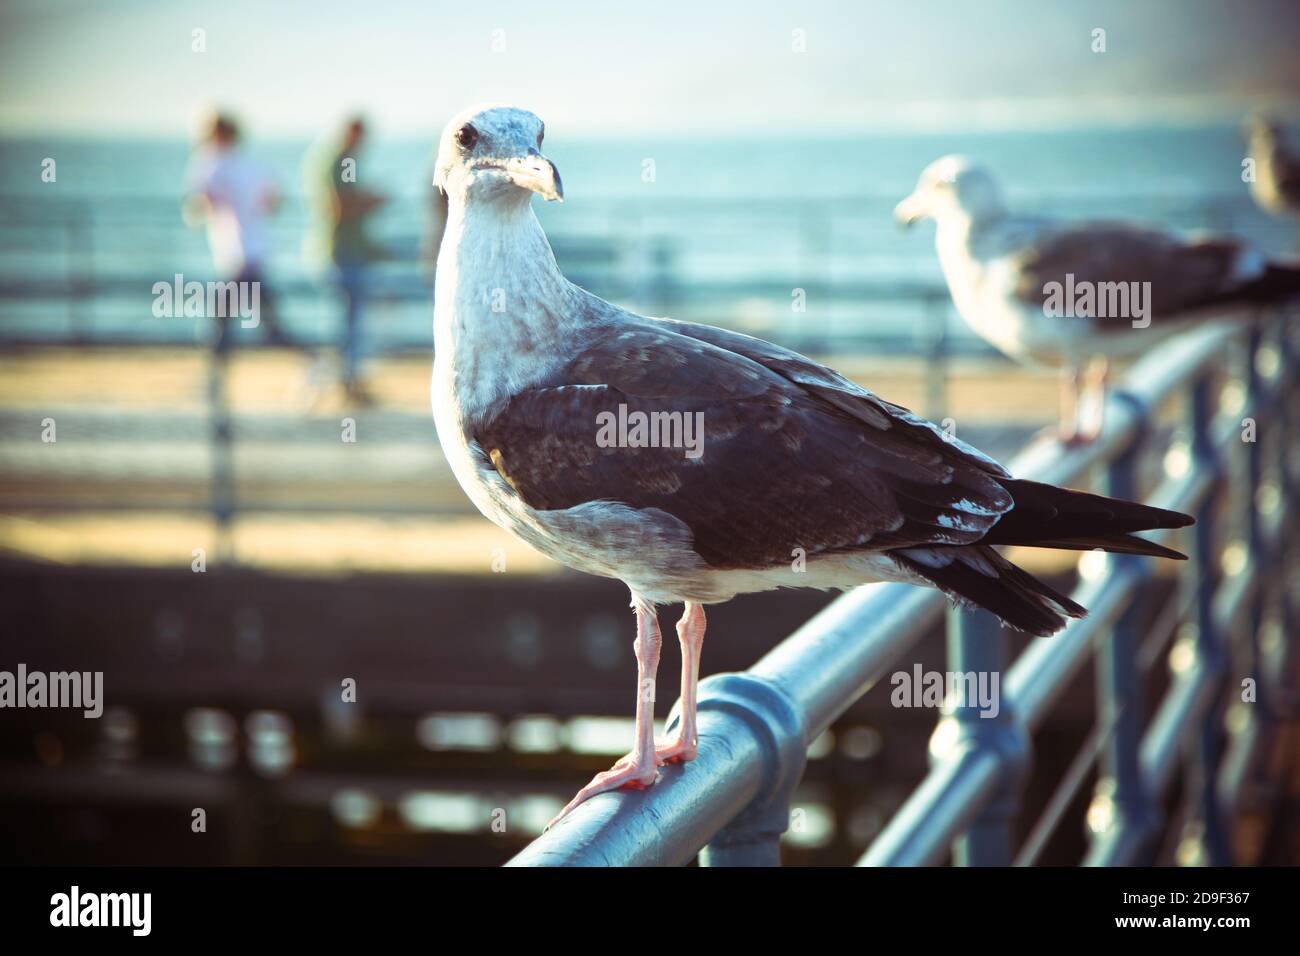 row of seagulls on a railing Stock Photo